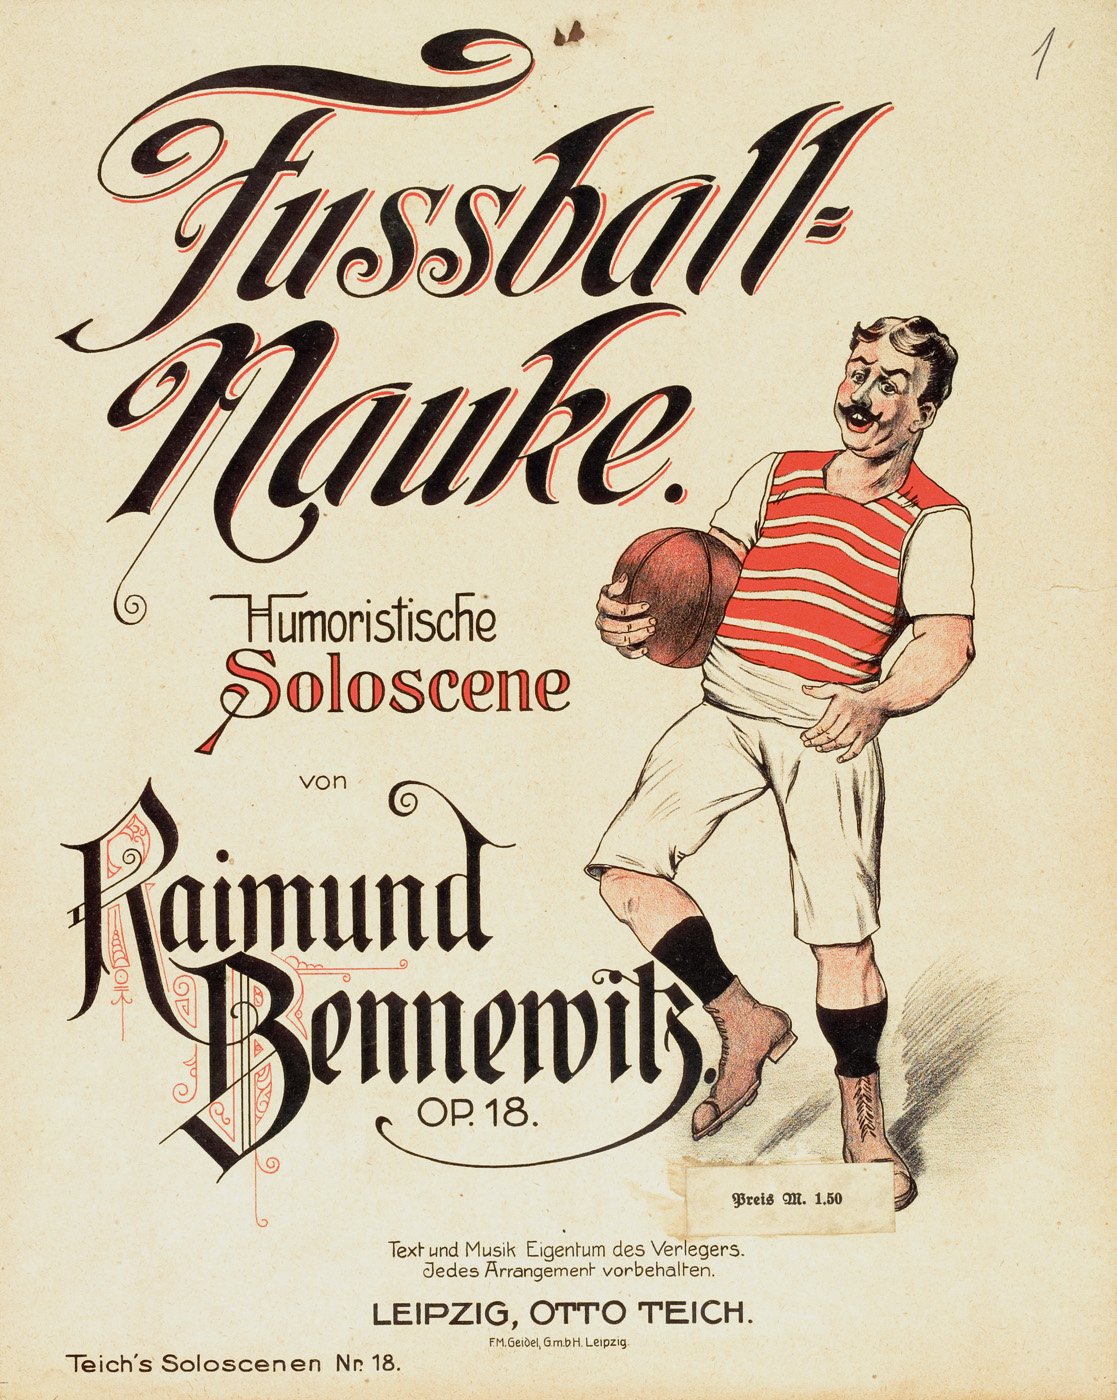 Fussball - Nauke (Sportmuseum Berlin CC0)